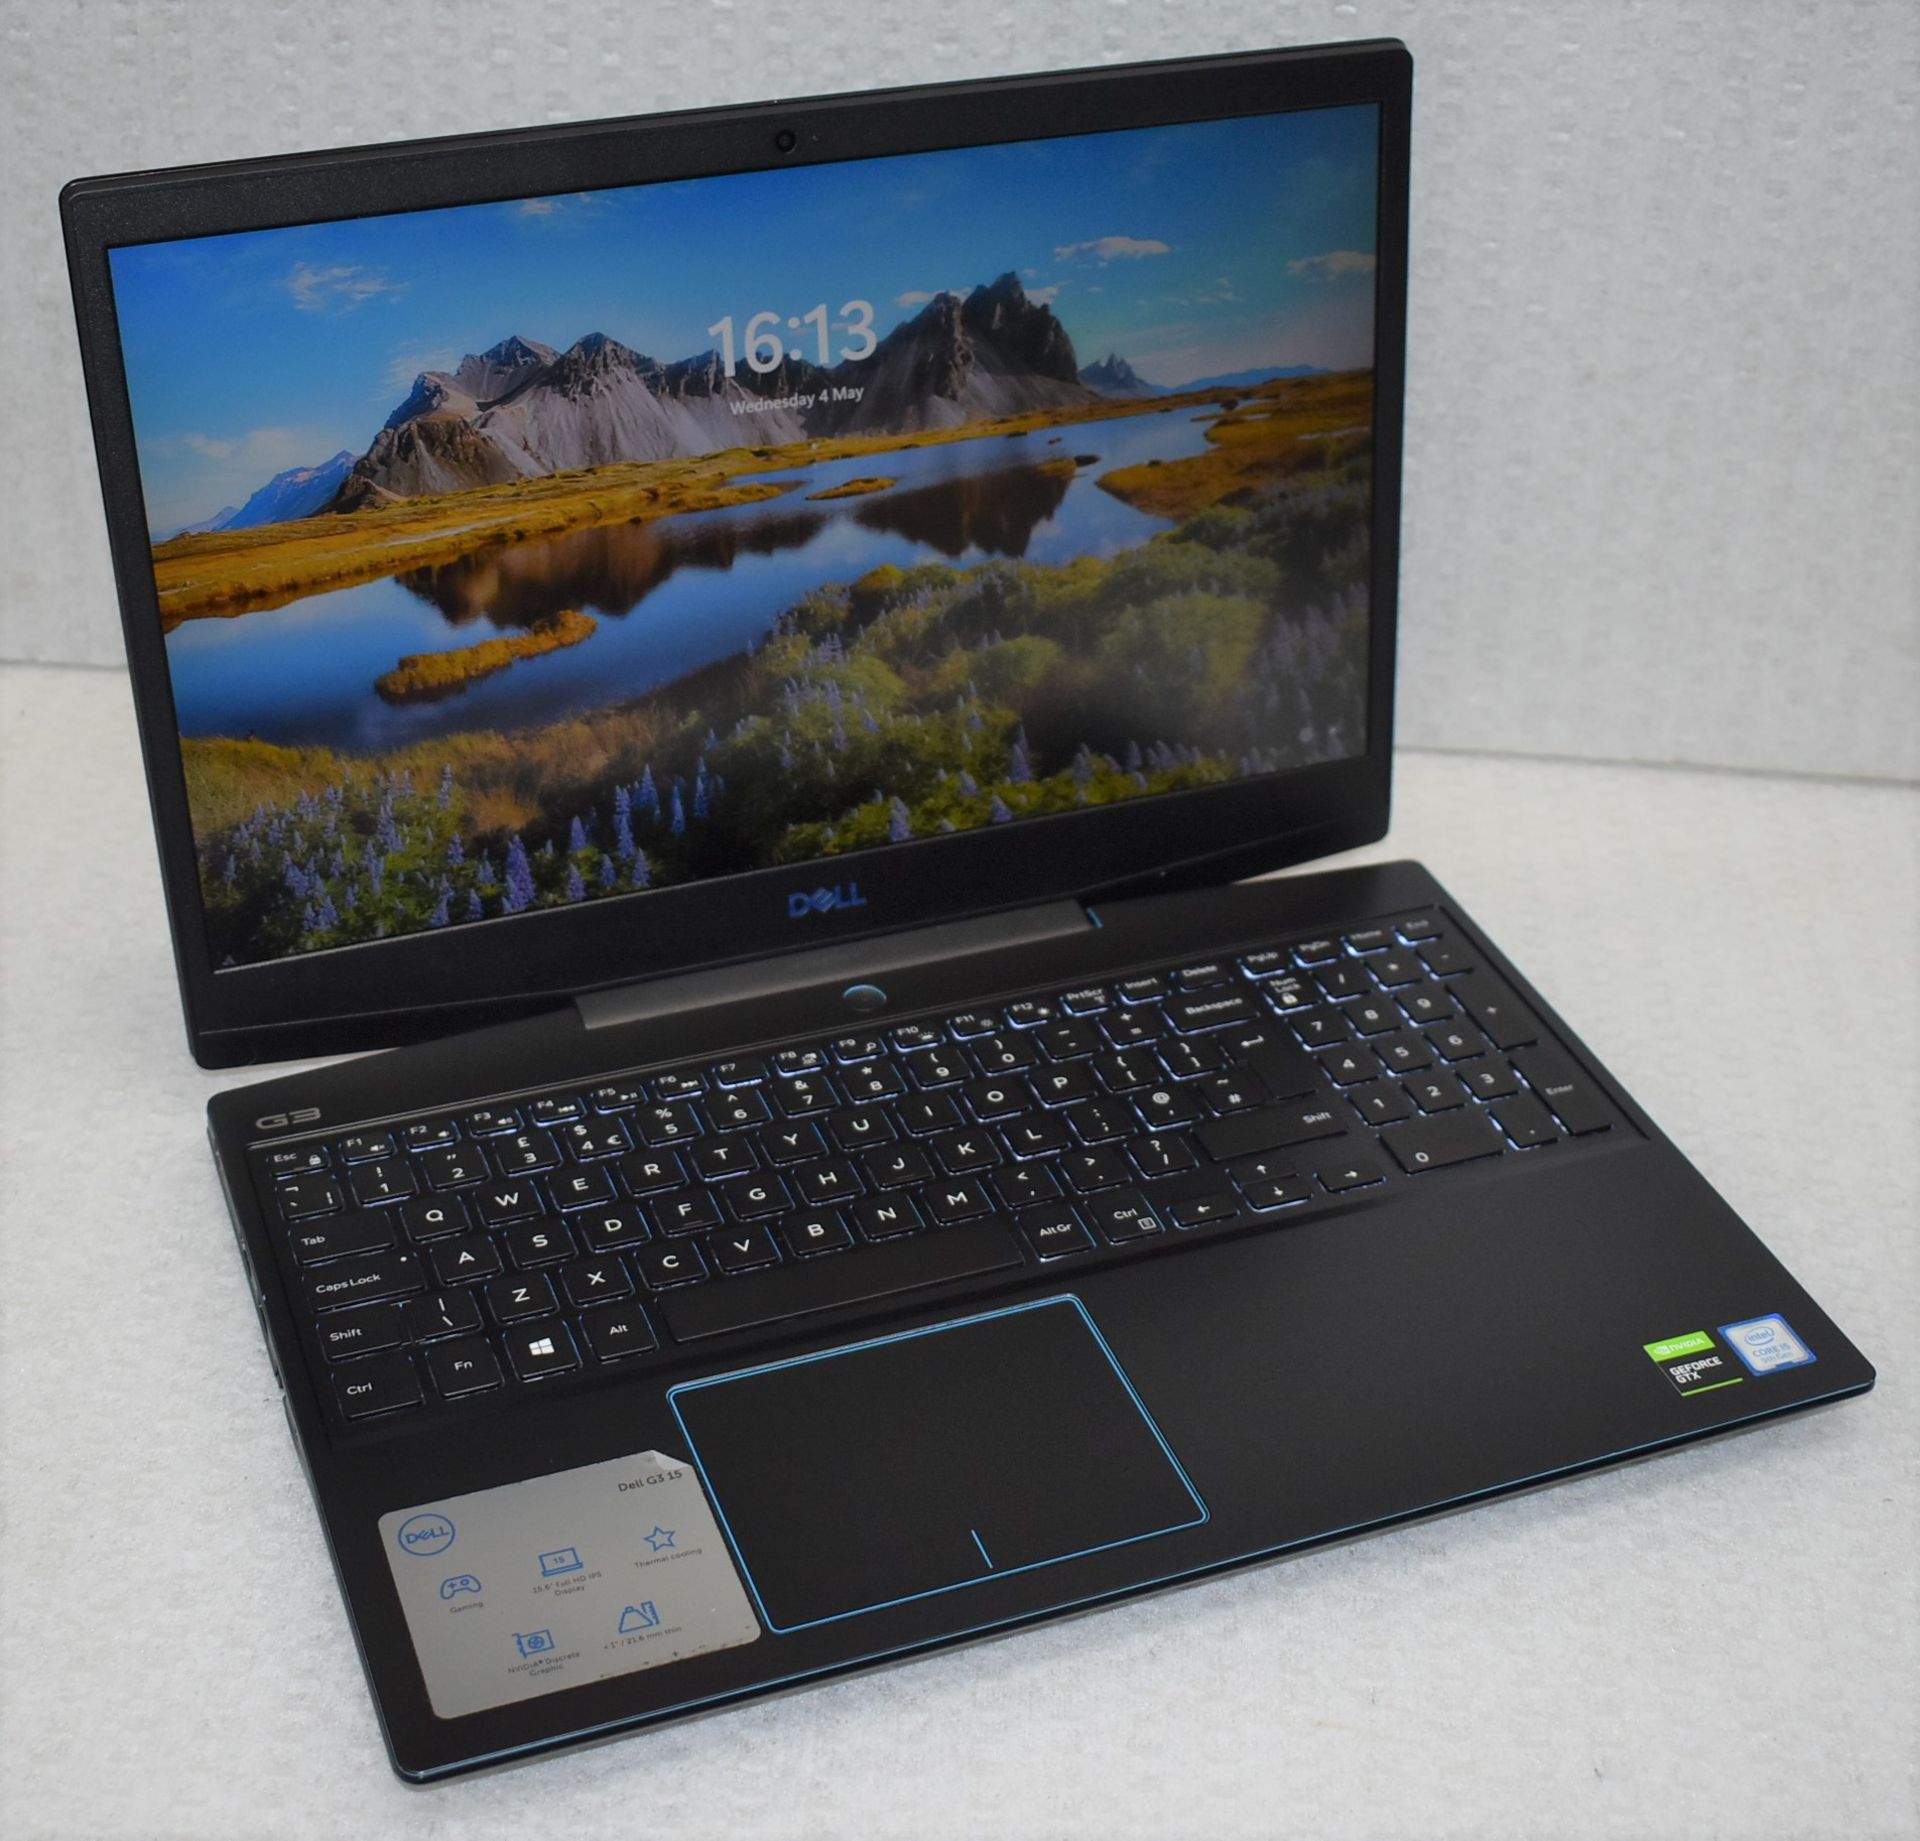 1 x Dell G3 15.6" FHD Gaming Laptop - Intel I5-9300H CPU, 8gb DDR4 Ram, 500gb SSD, GTX1050 Graphics - Image 2 of 30